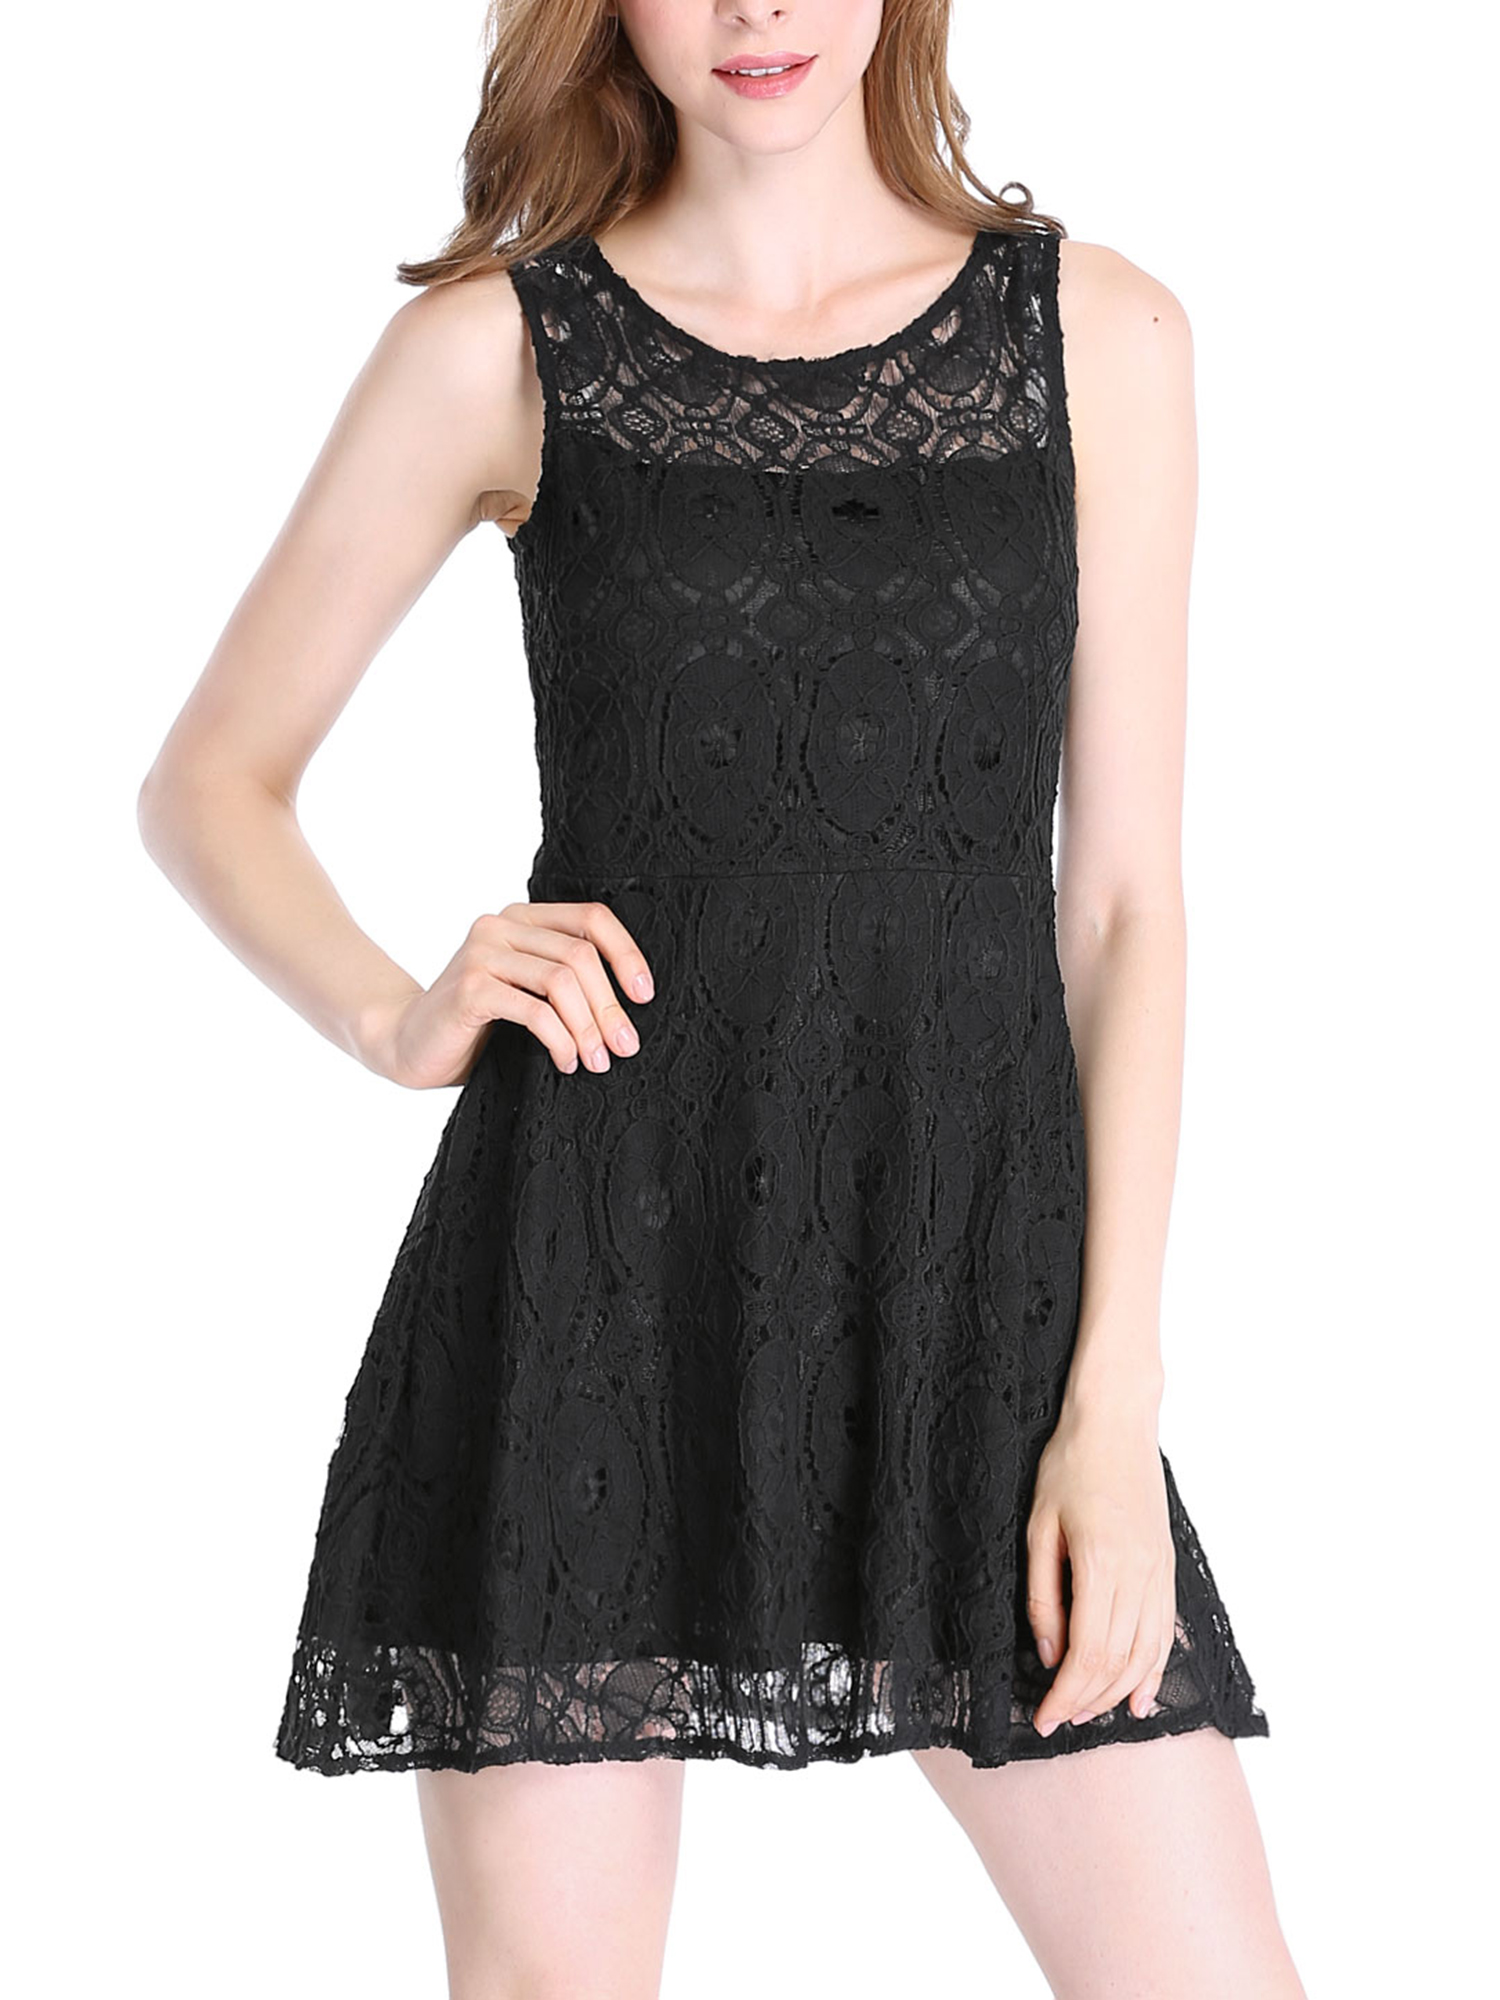 MODA NOVA Junior's Floral Lace Sleeveless Semi Sheer Flare Mini Dress Black L - image 1 of 6